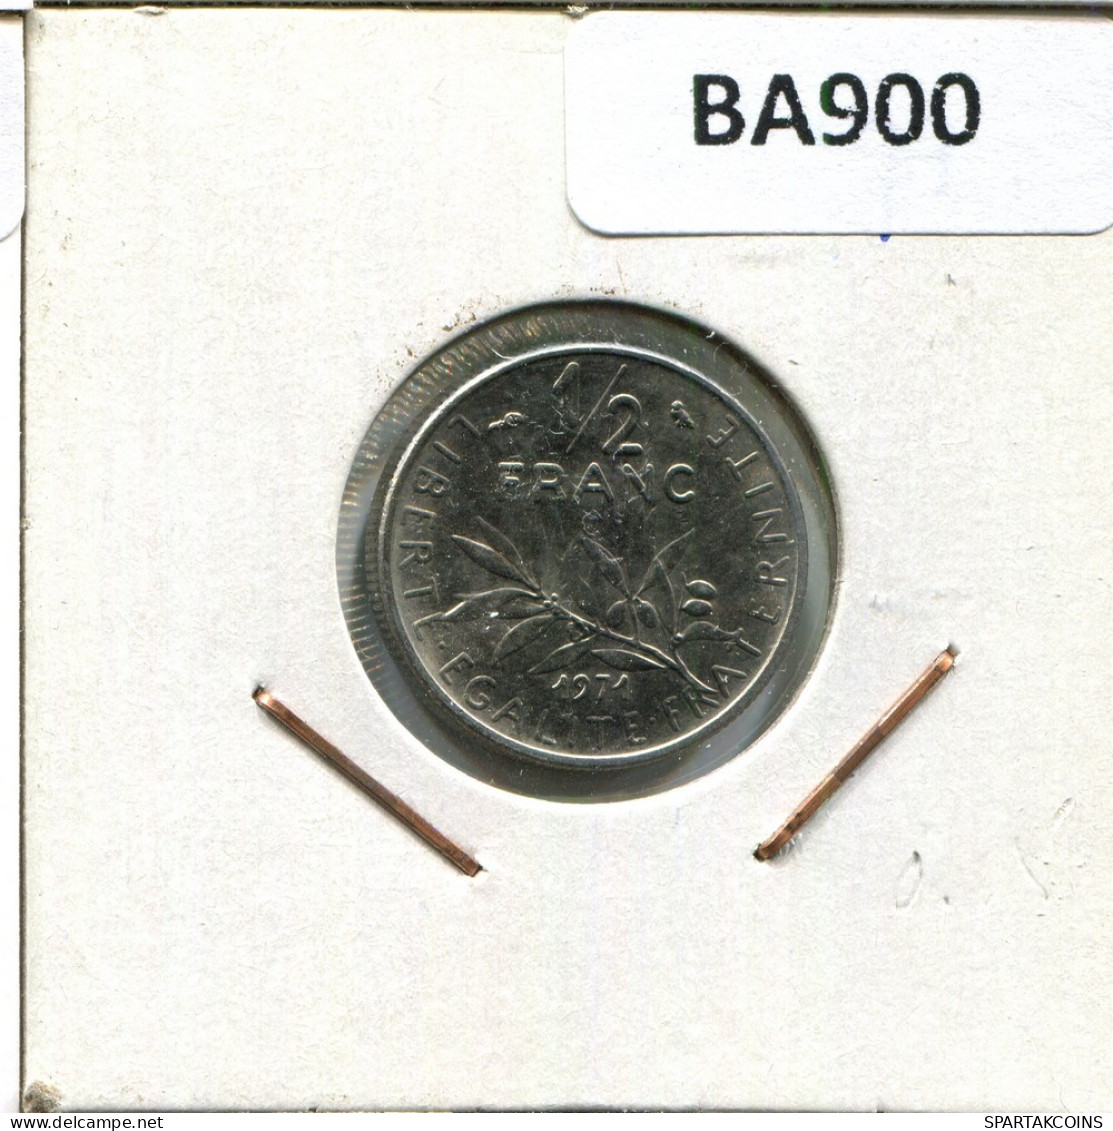 1/2 FRANC 1971 FRANKREICH FRANCE Französisch Münze #BA900.D.A - 1/2 Franc